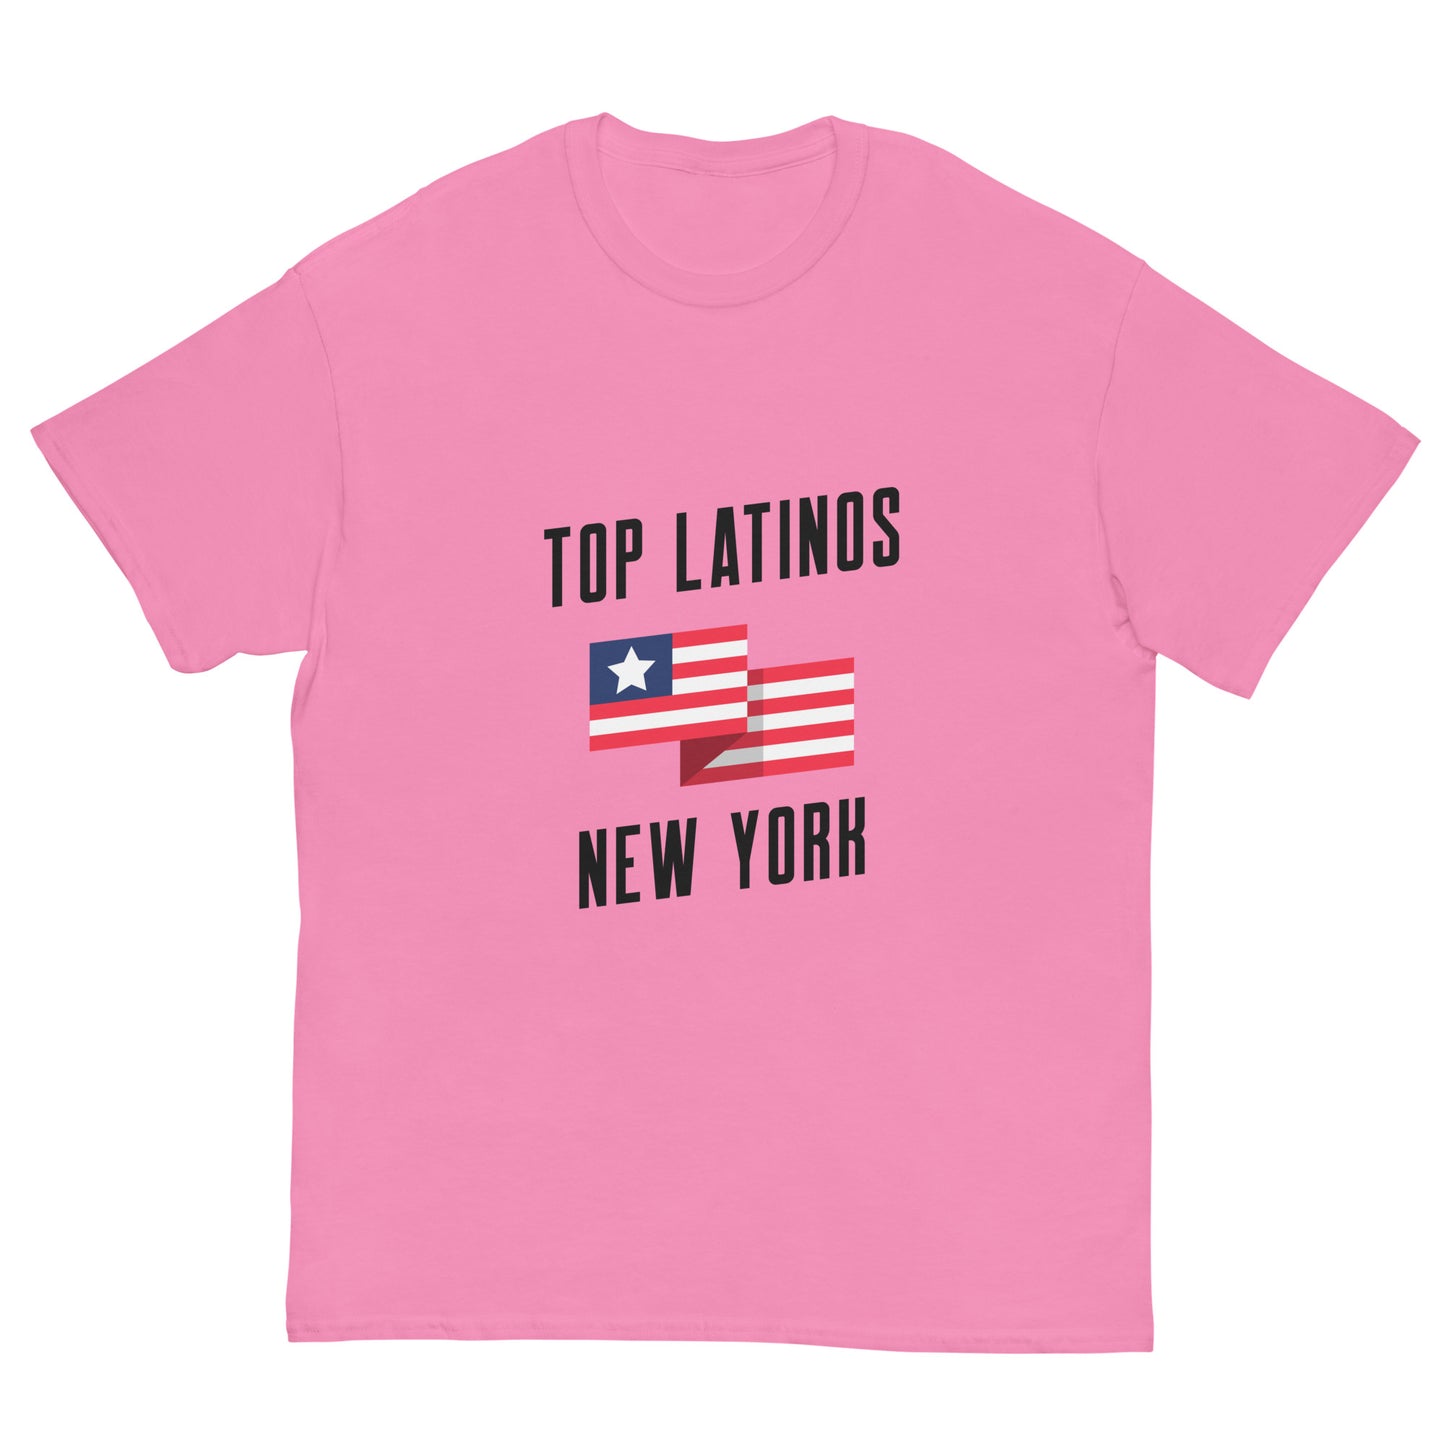 Top Latinos New York classic tee